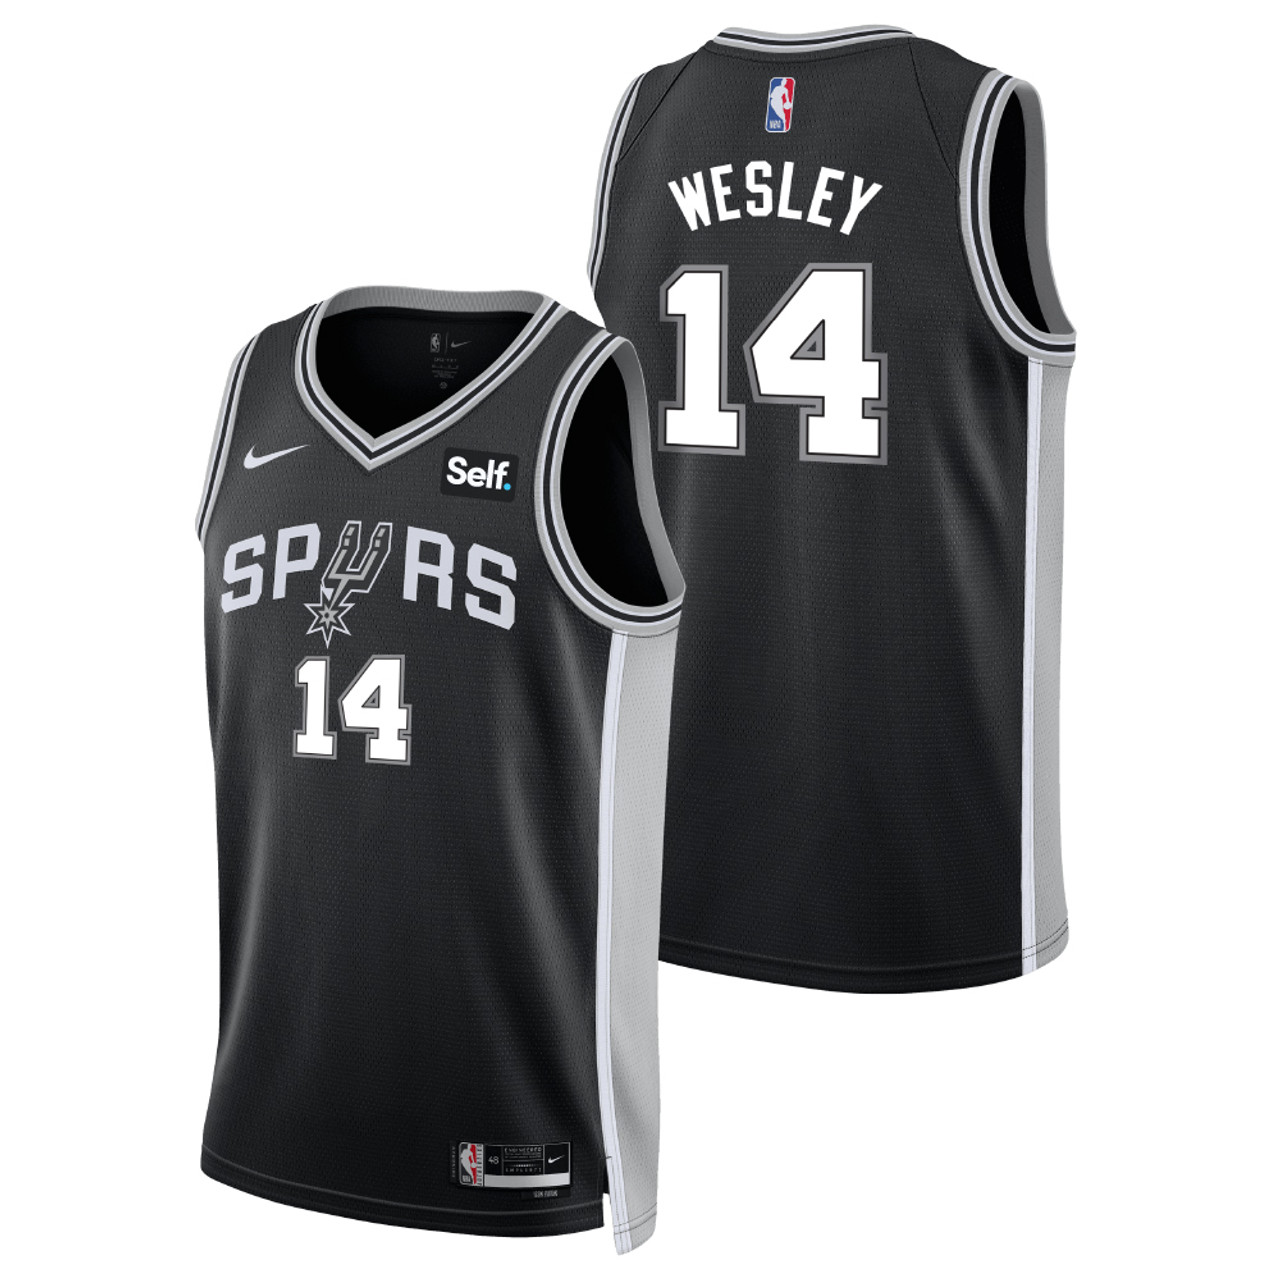 San Antonio Spurs Men's Nike Blake Wesley Icon Swingman Jersey